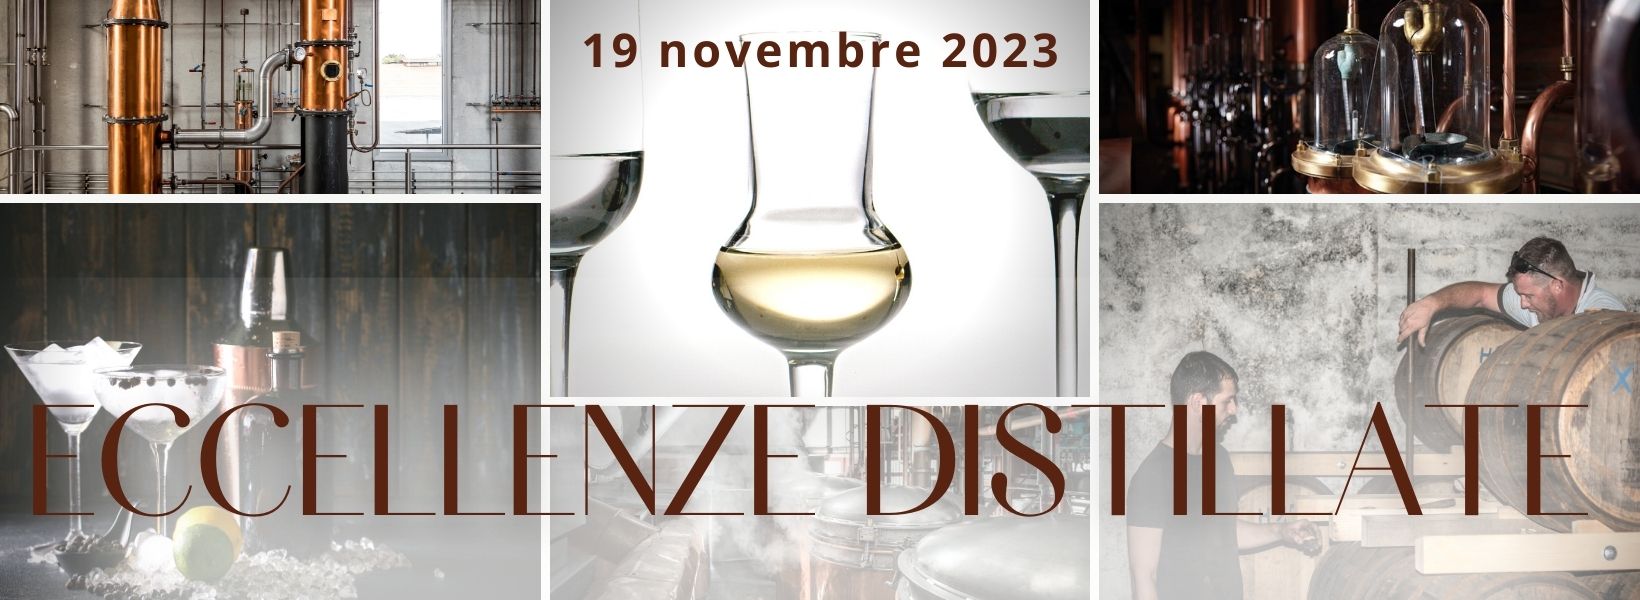 Eccellenze distillate 2023 - EventiFVG.it